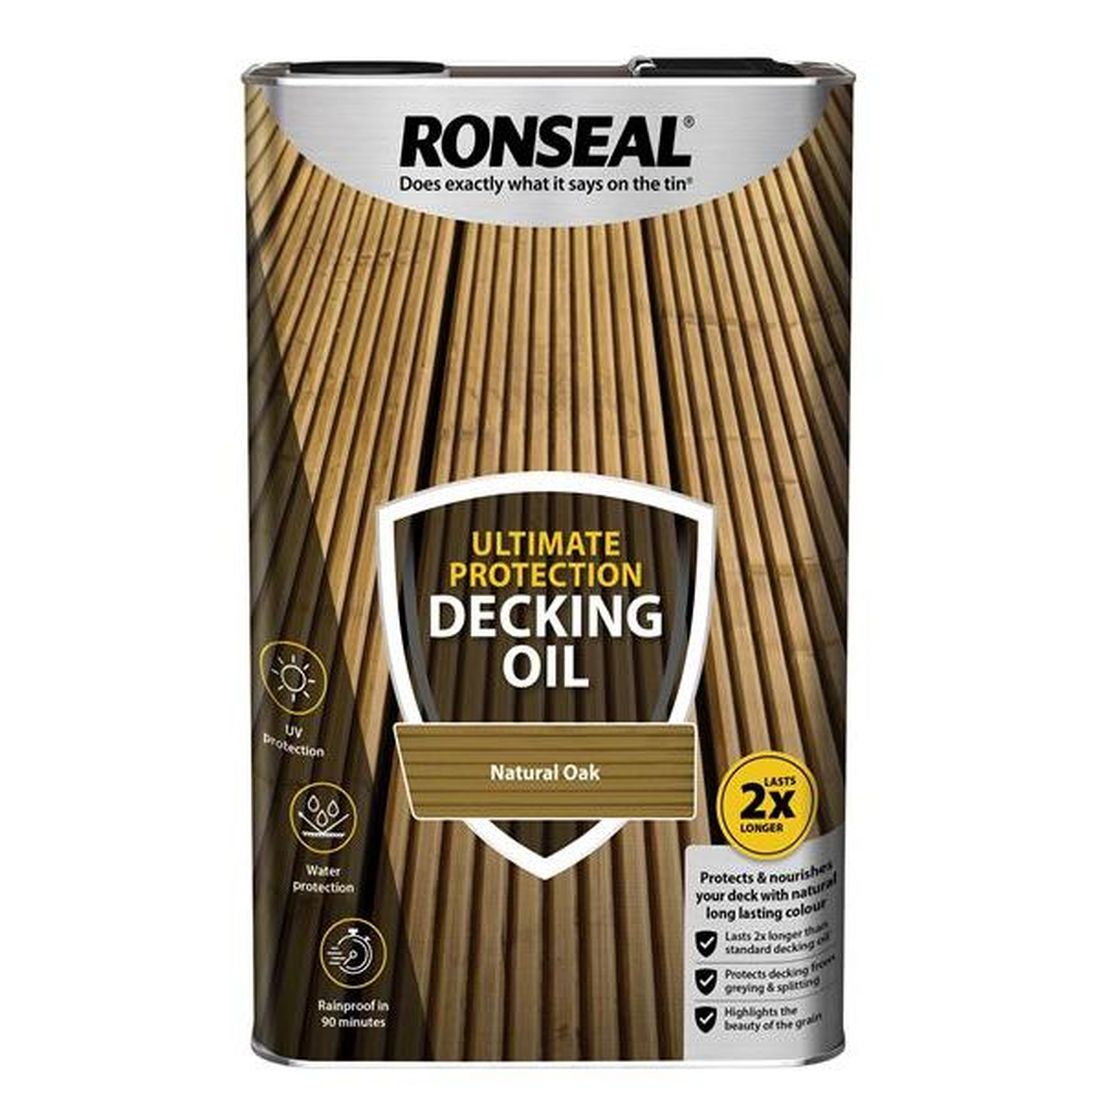 Ronseal Ultimate Protection Decking Oil Natural Oak 5 litre                             